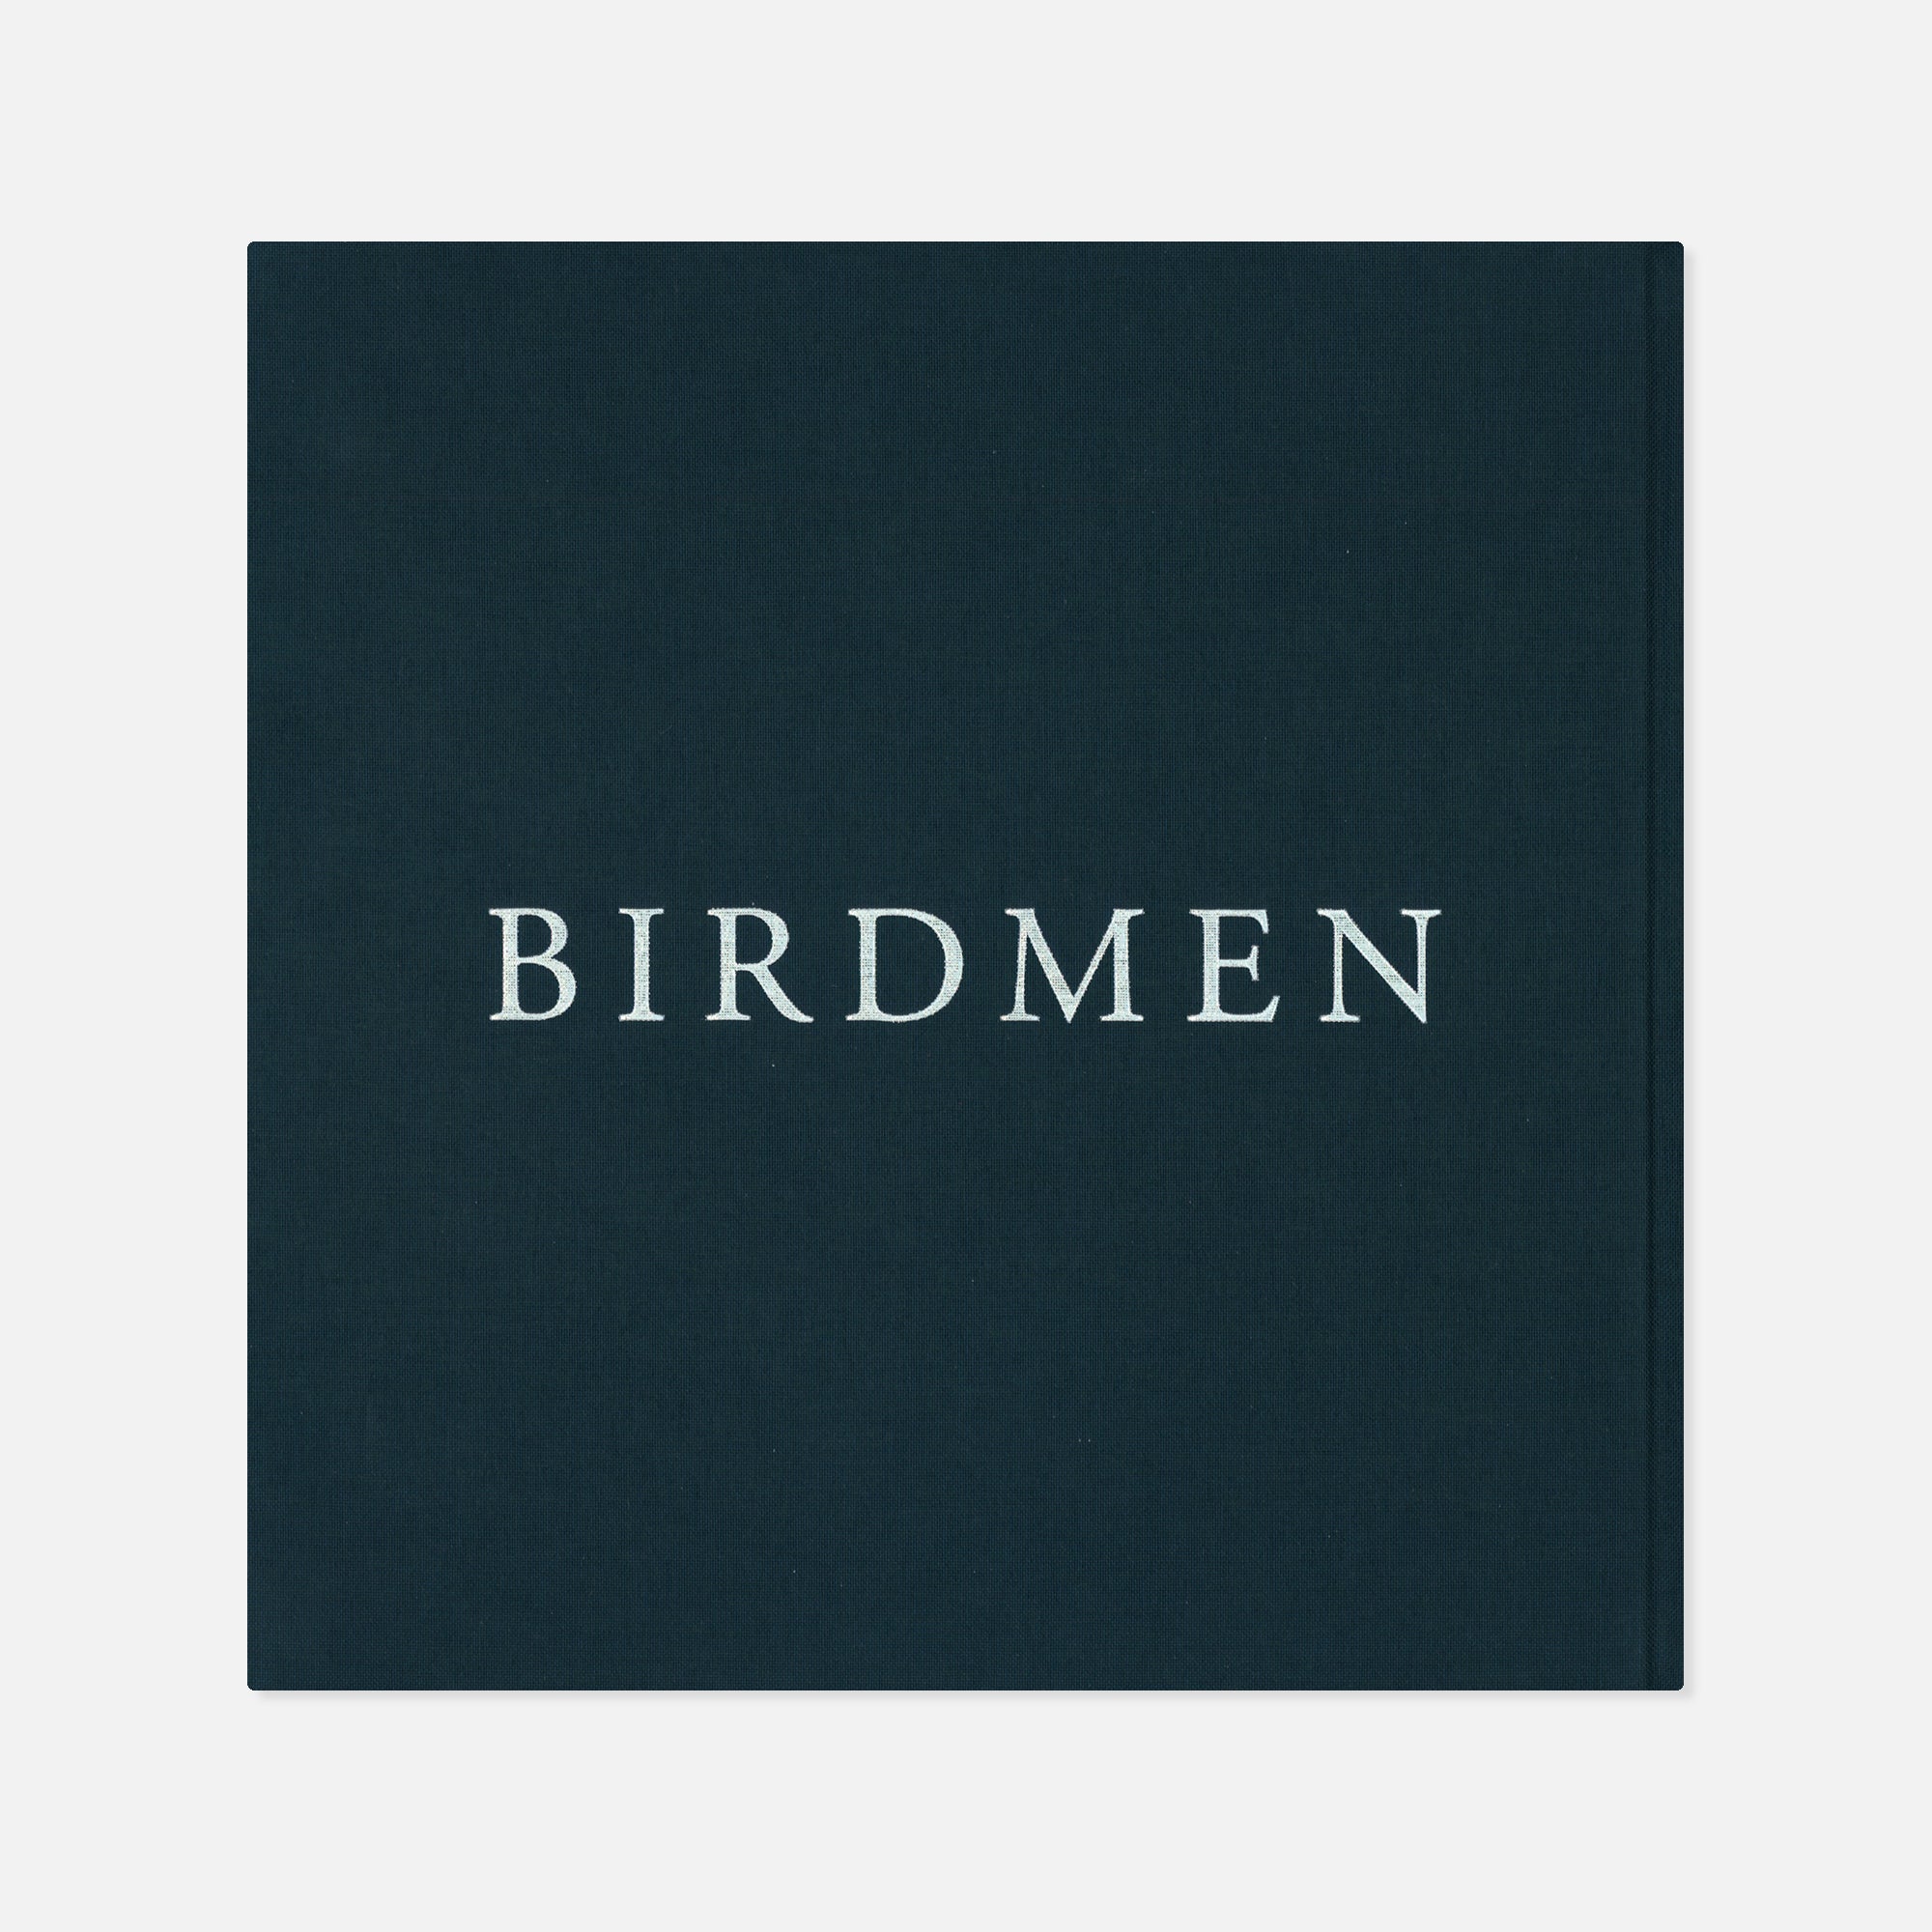 Dod Miller — Birdmen